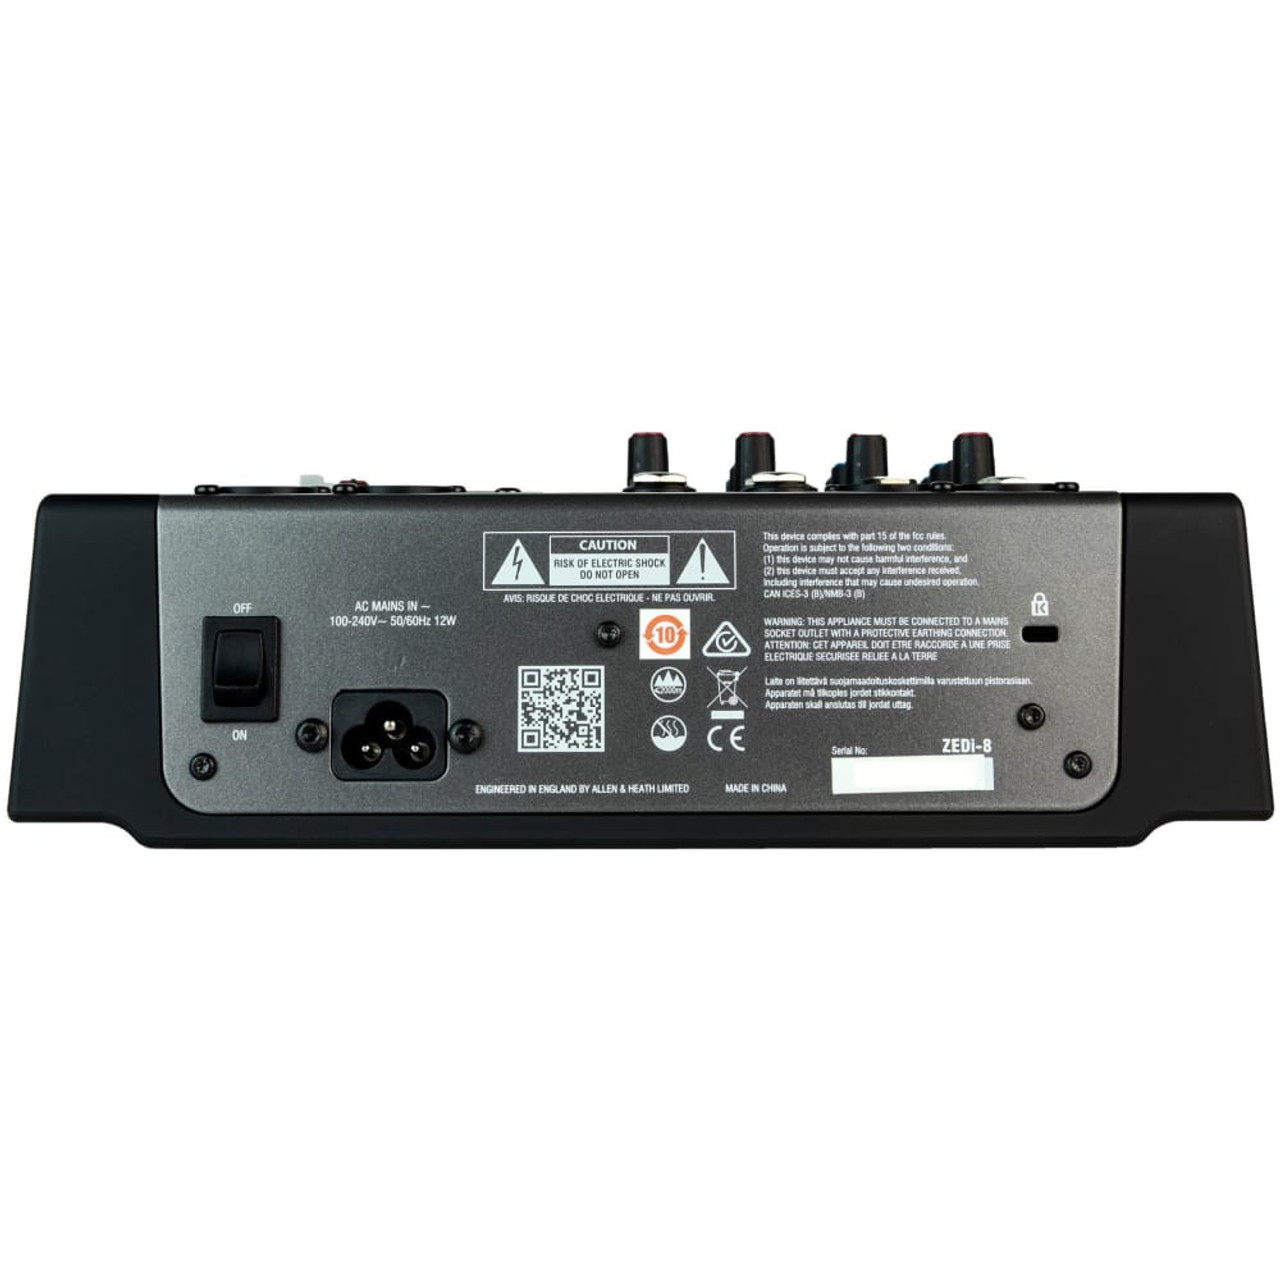 ALLEN & HEATH ZEDI8 2 Mic/Line with Active DI 2 Stereo Inputs, 24